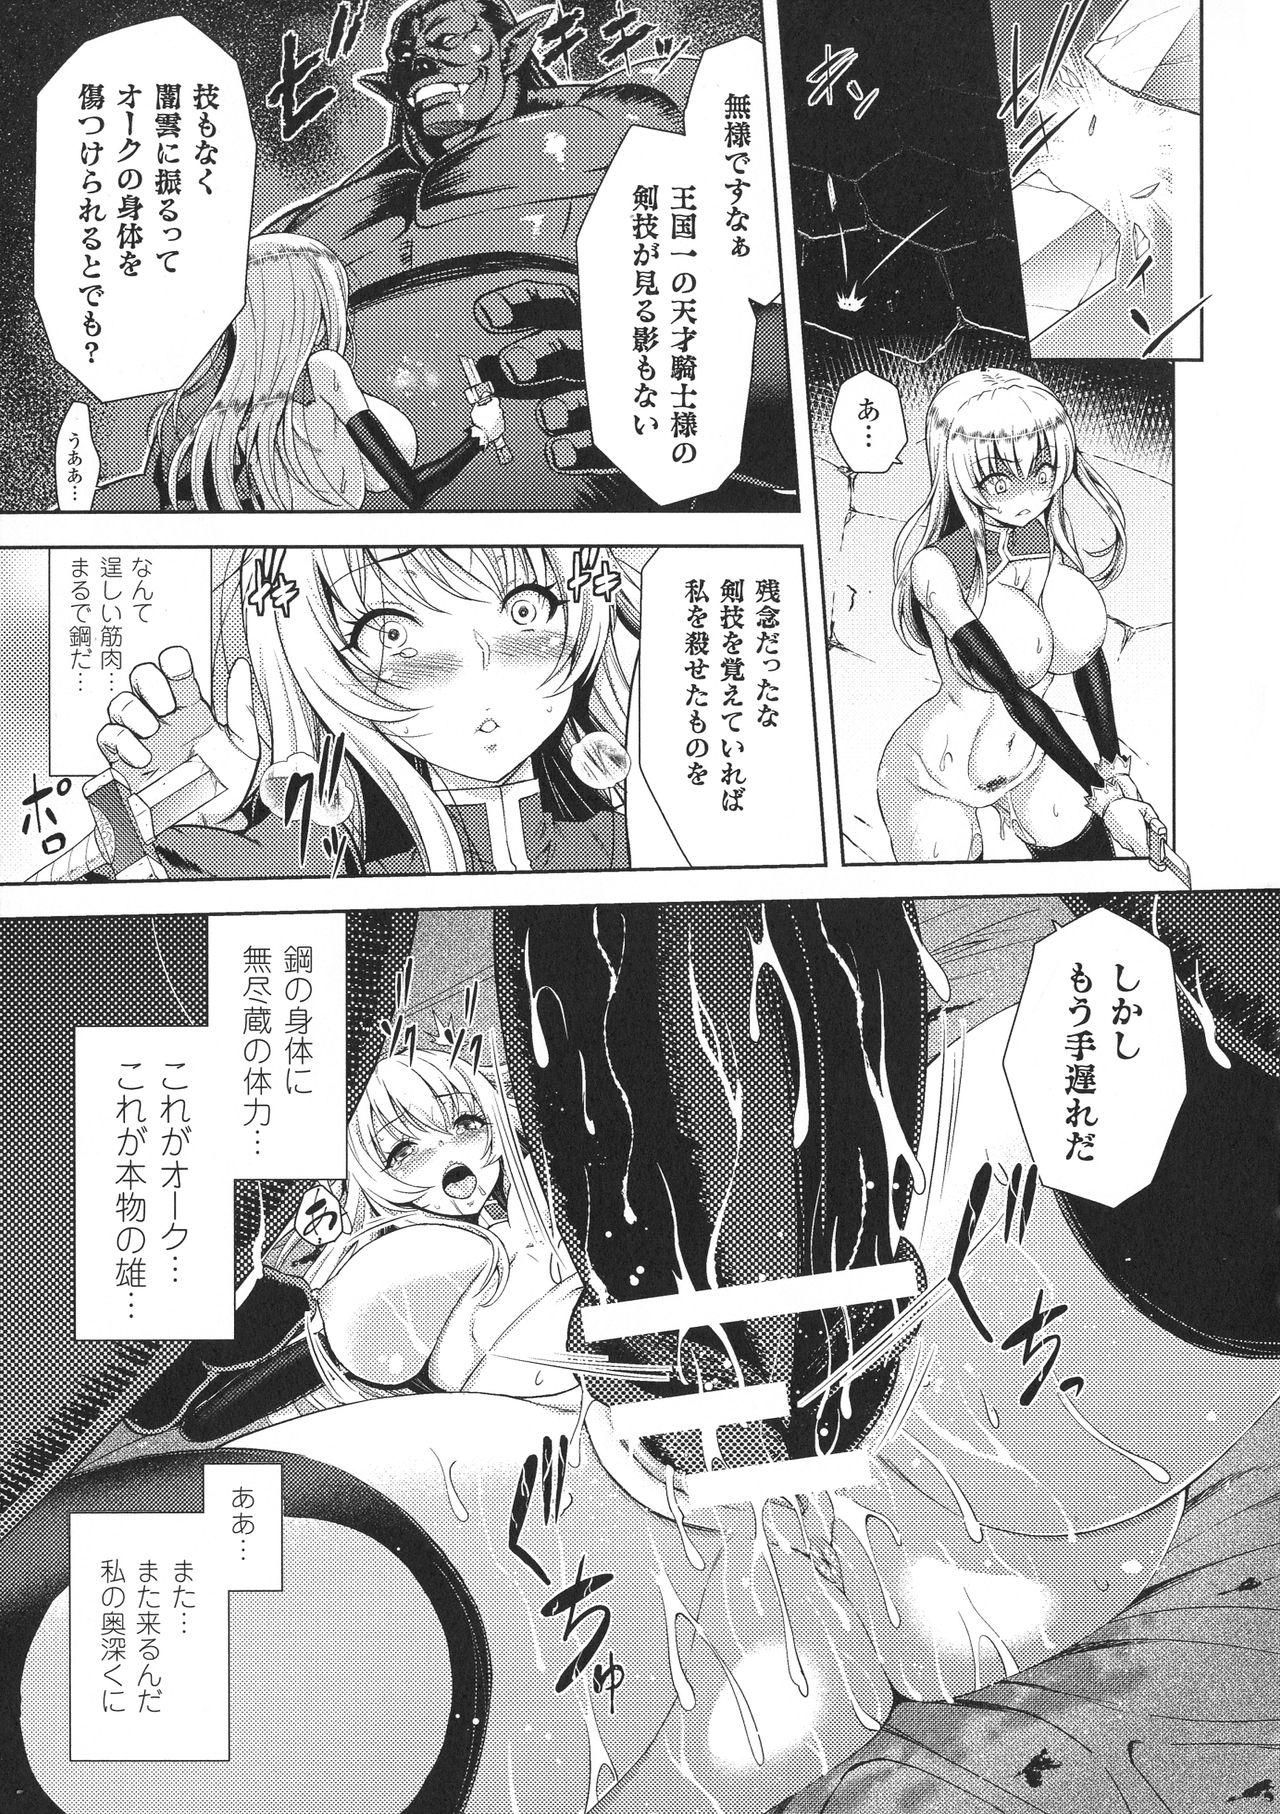 Seigi no Heroine Kangoku File DX Vol. 8 40